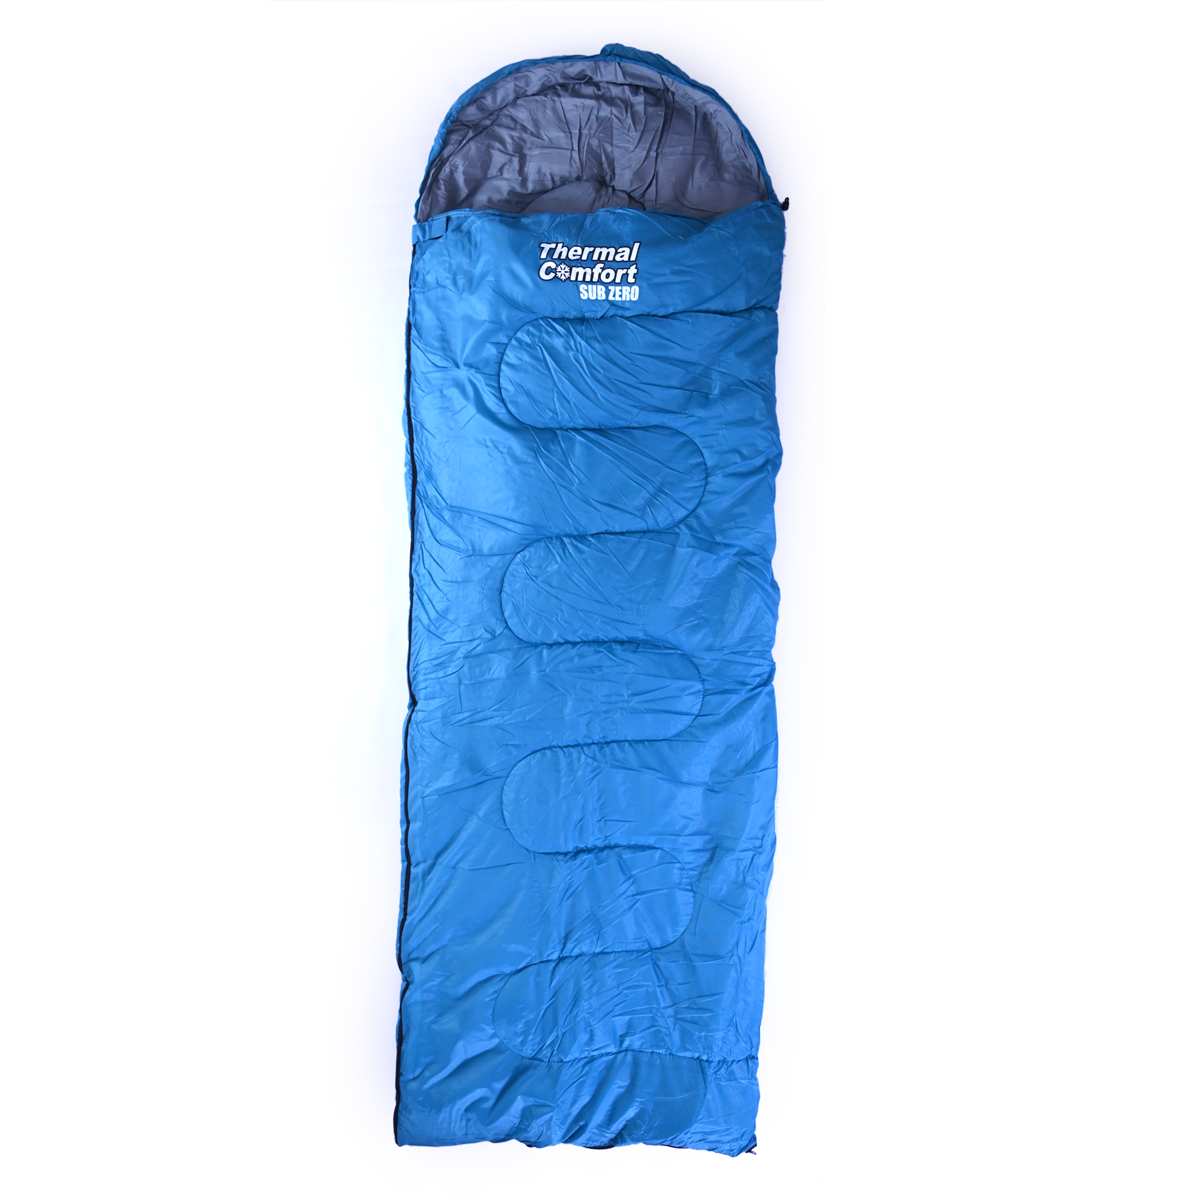 Thermal Comfort Sub Zero Sleeping Bag